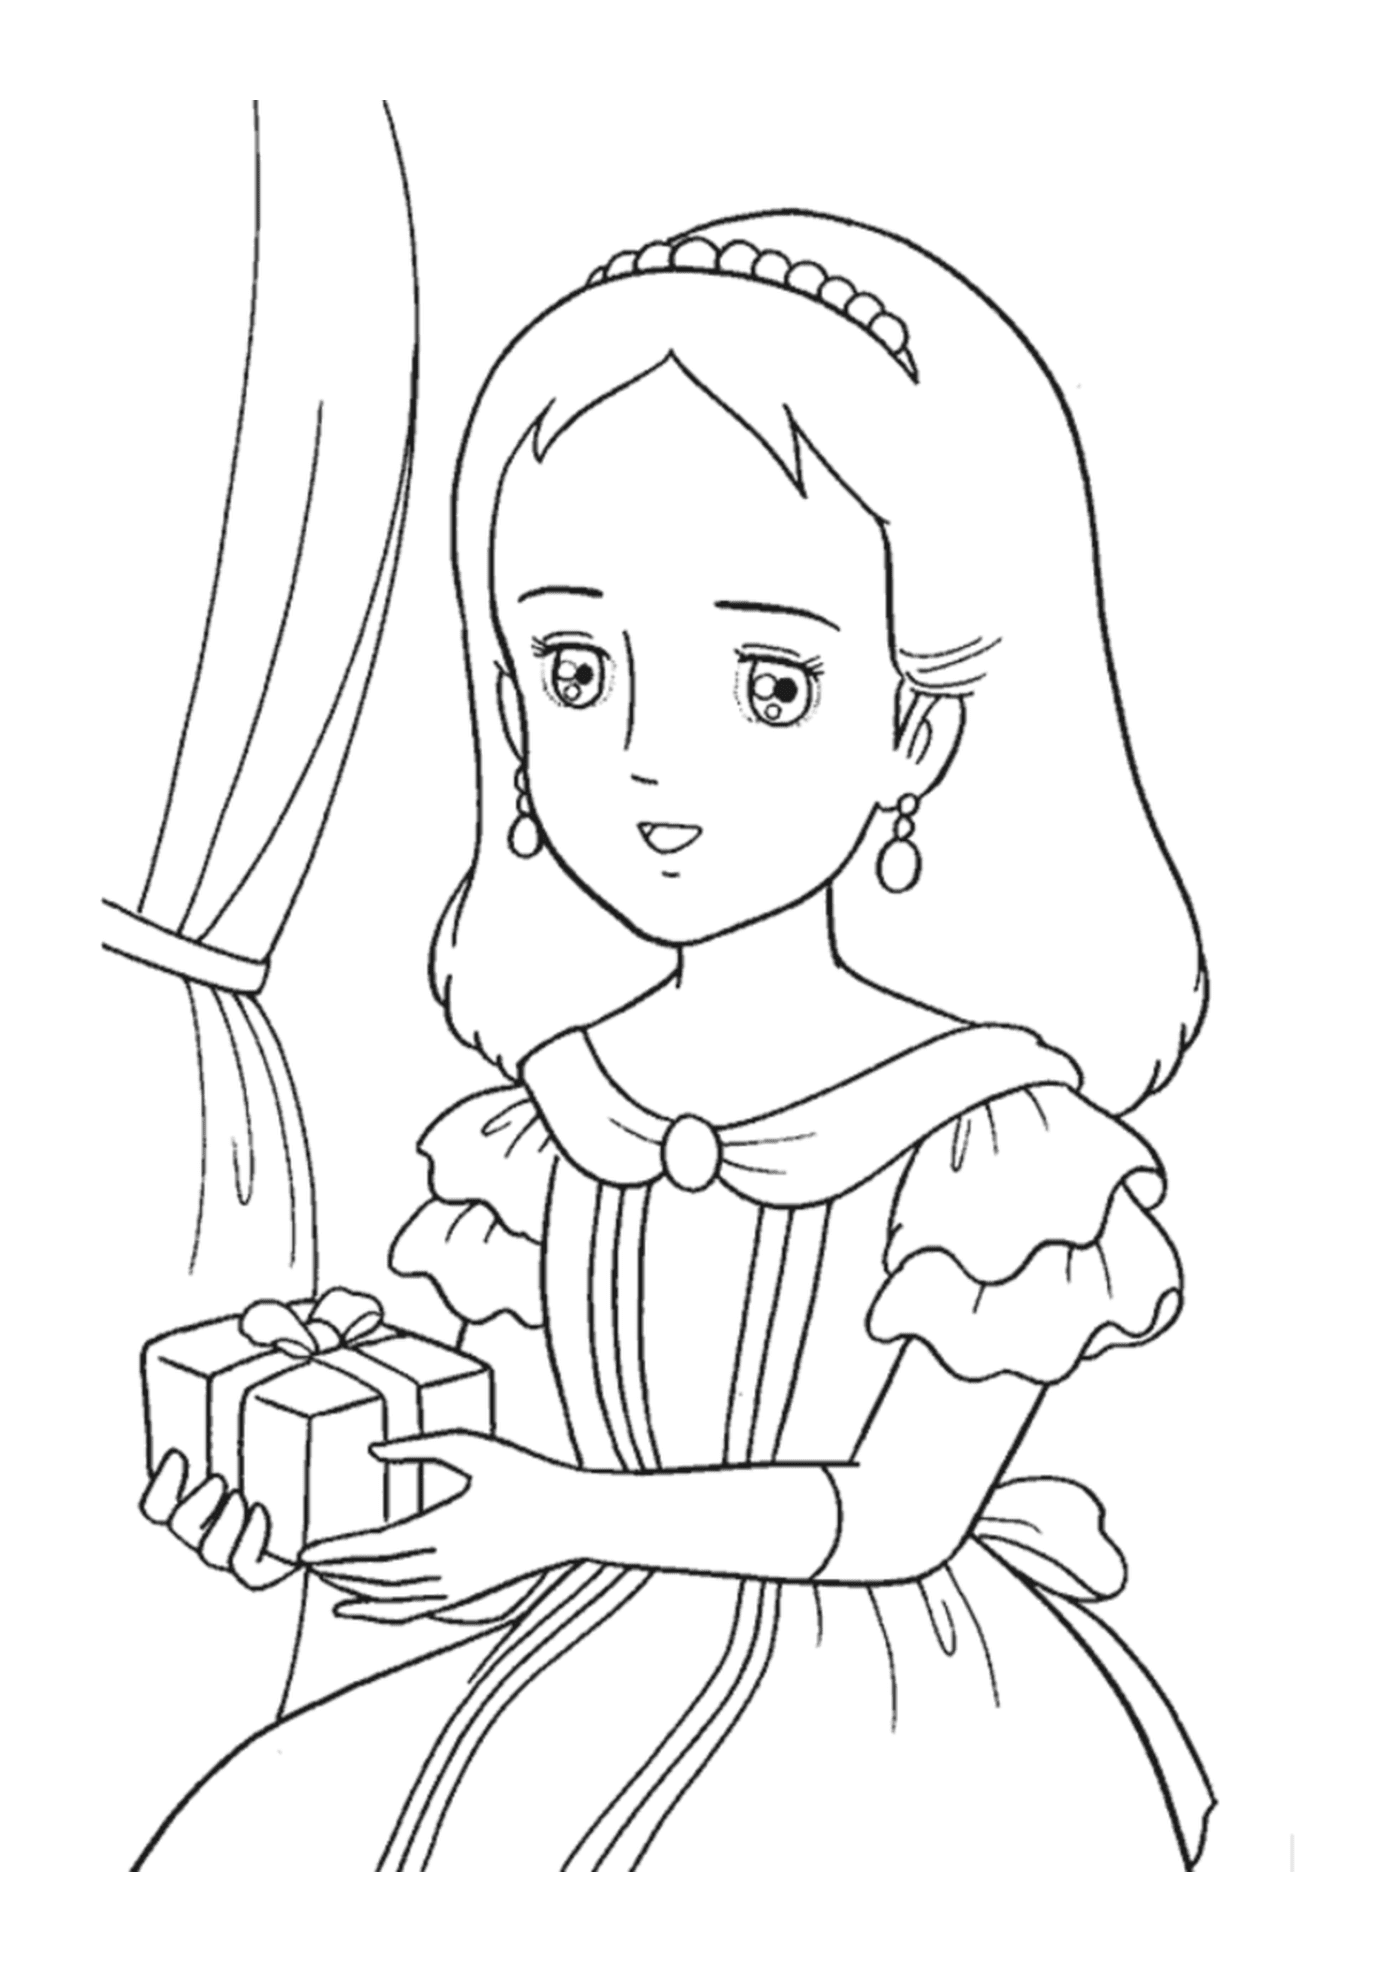  Disney Princess, a girl holding a gift 